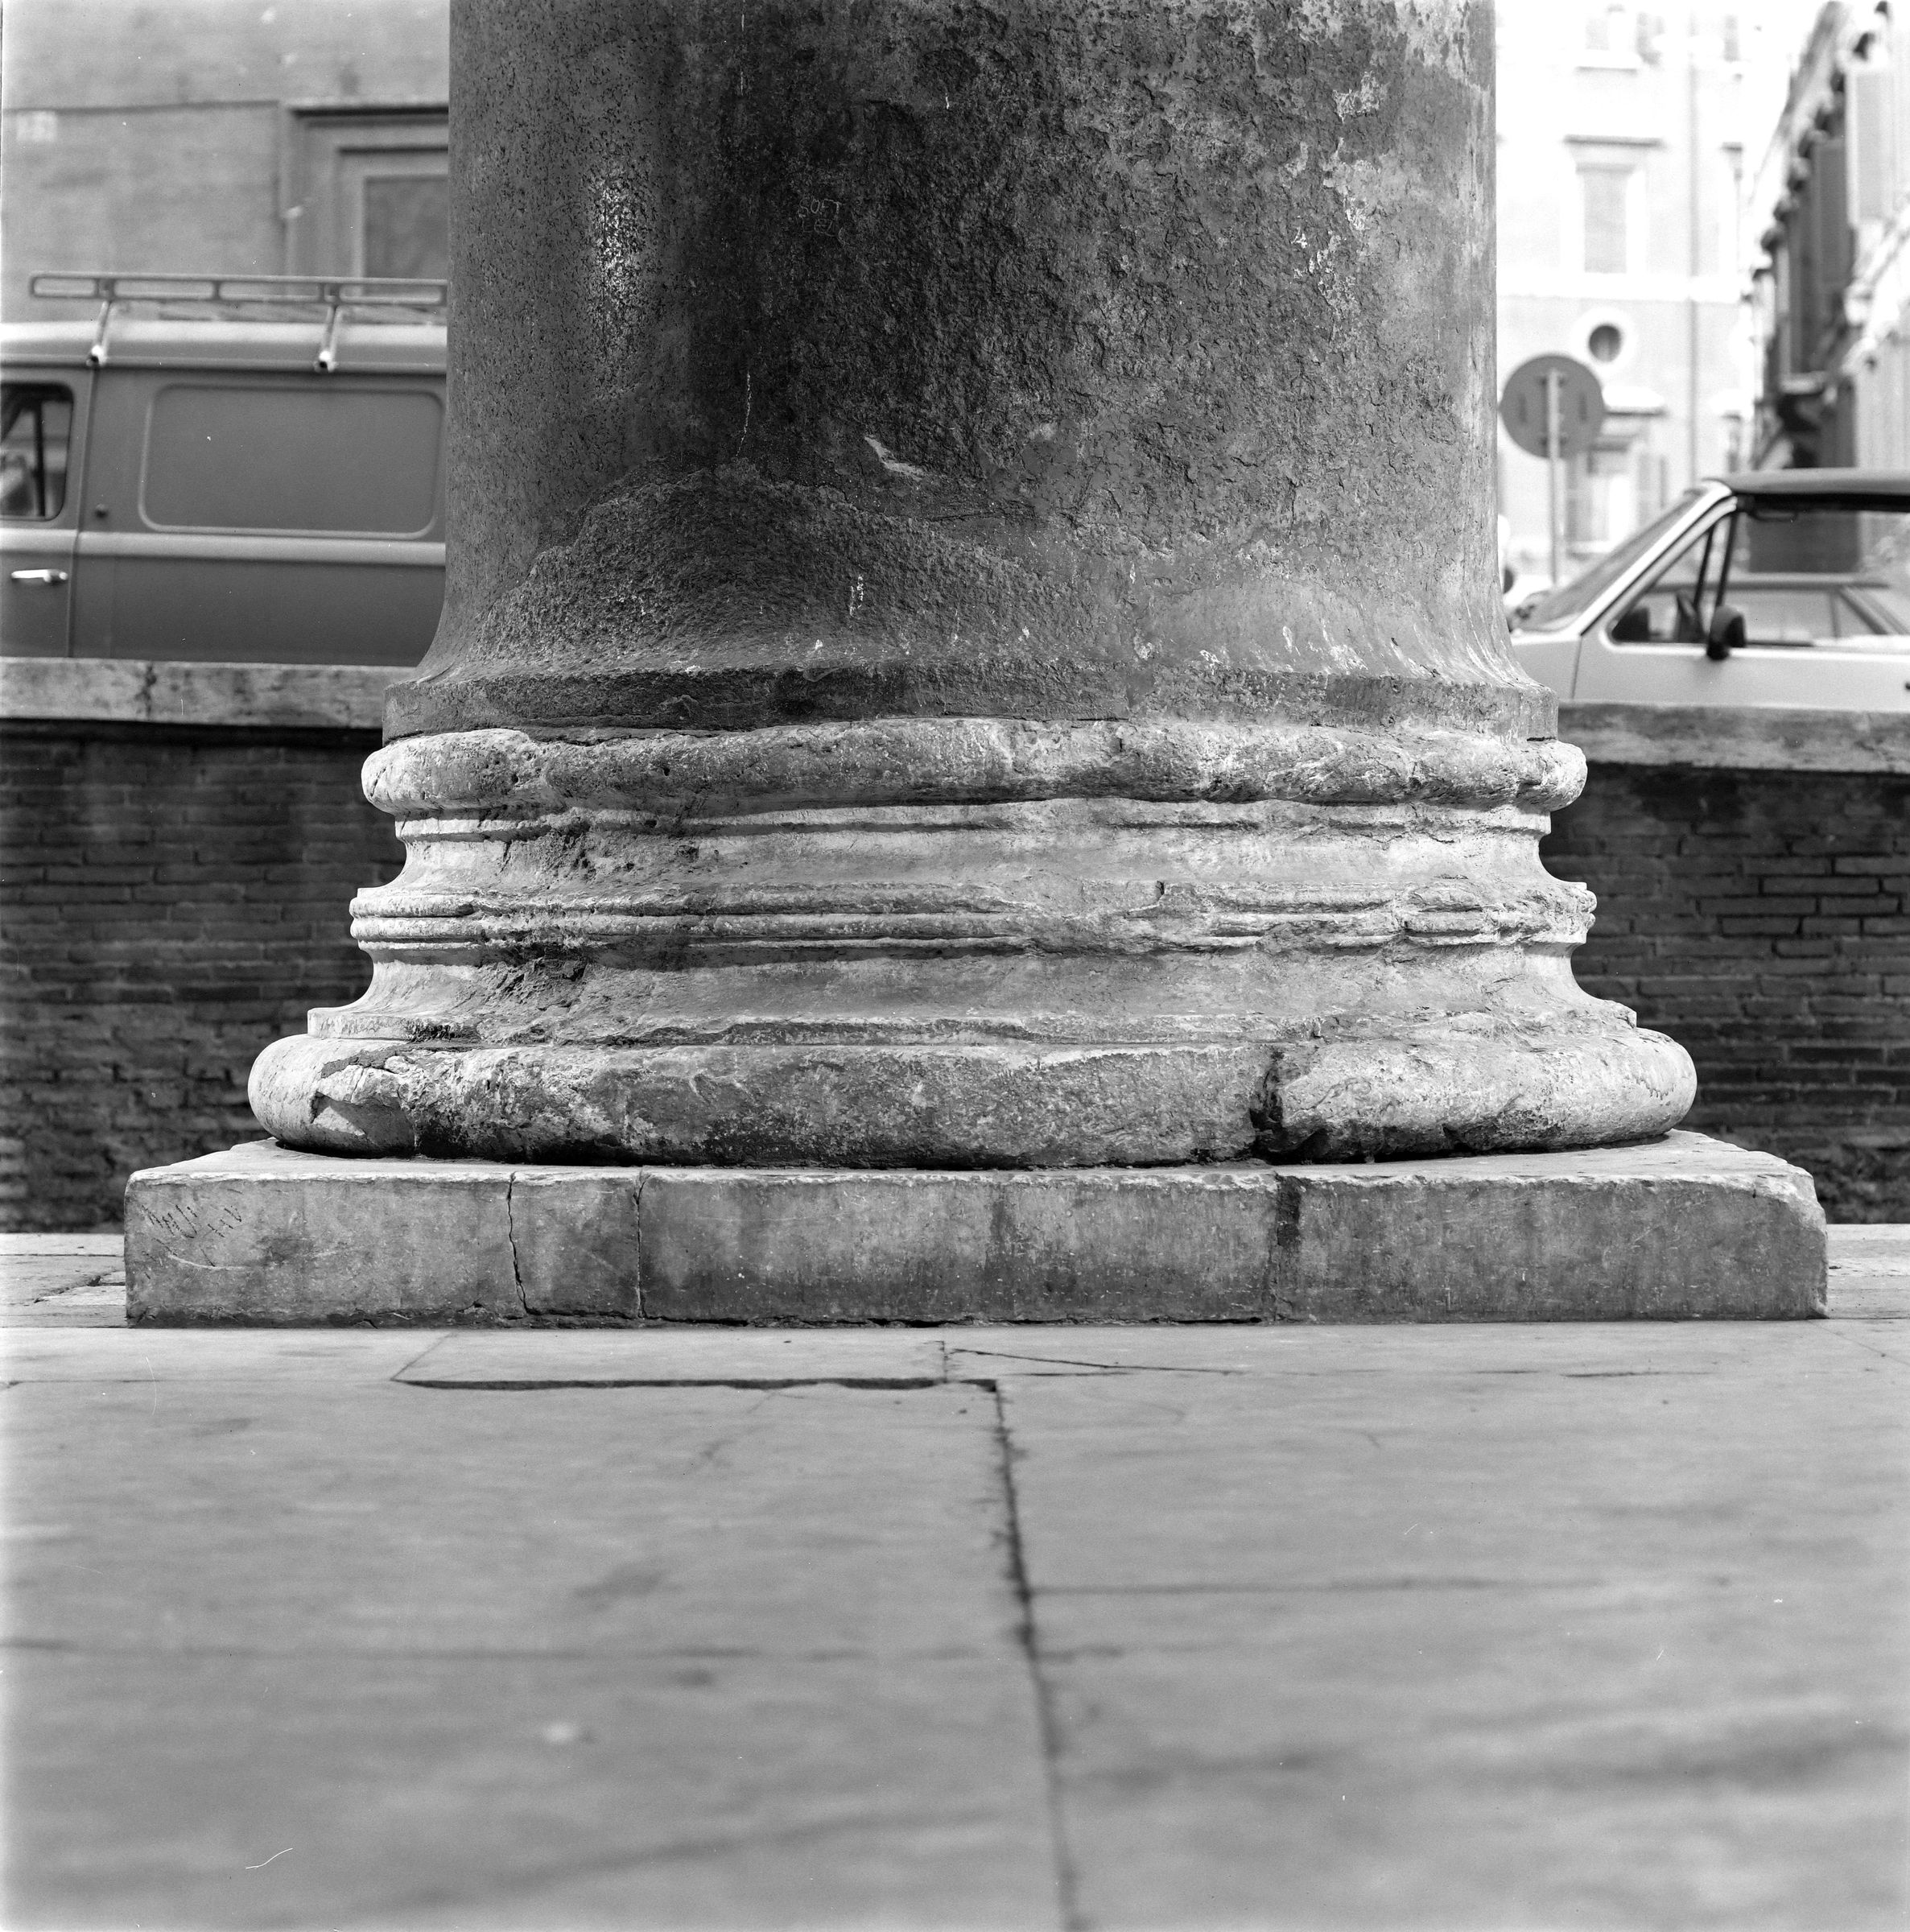 Fotografo non identificato, Pantheon,1951-2000, gelatina ai sali d'argento, 6x6 cm, N077969